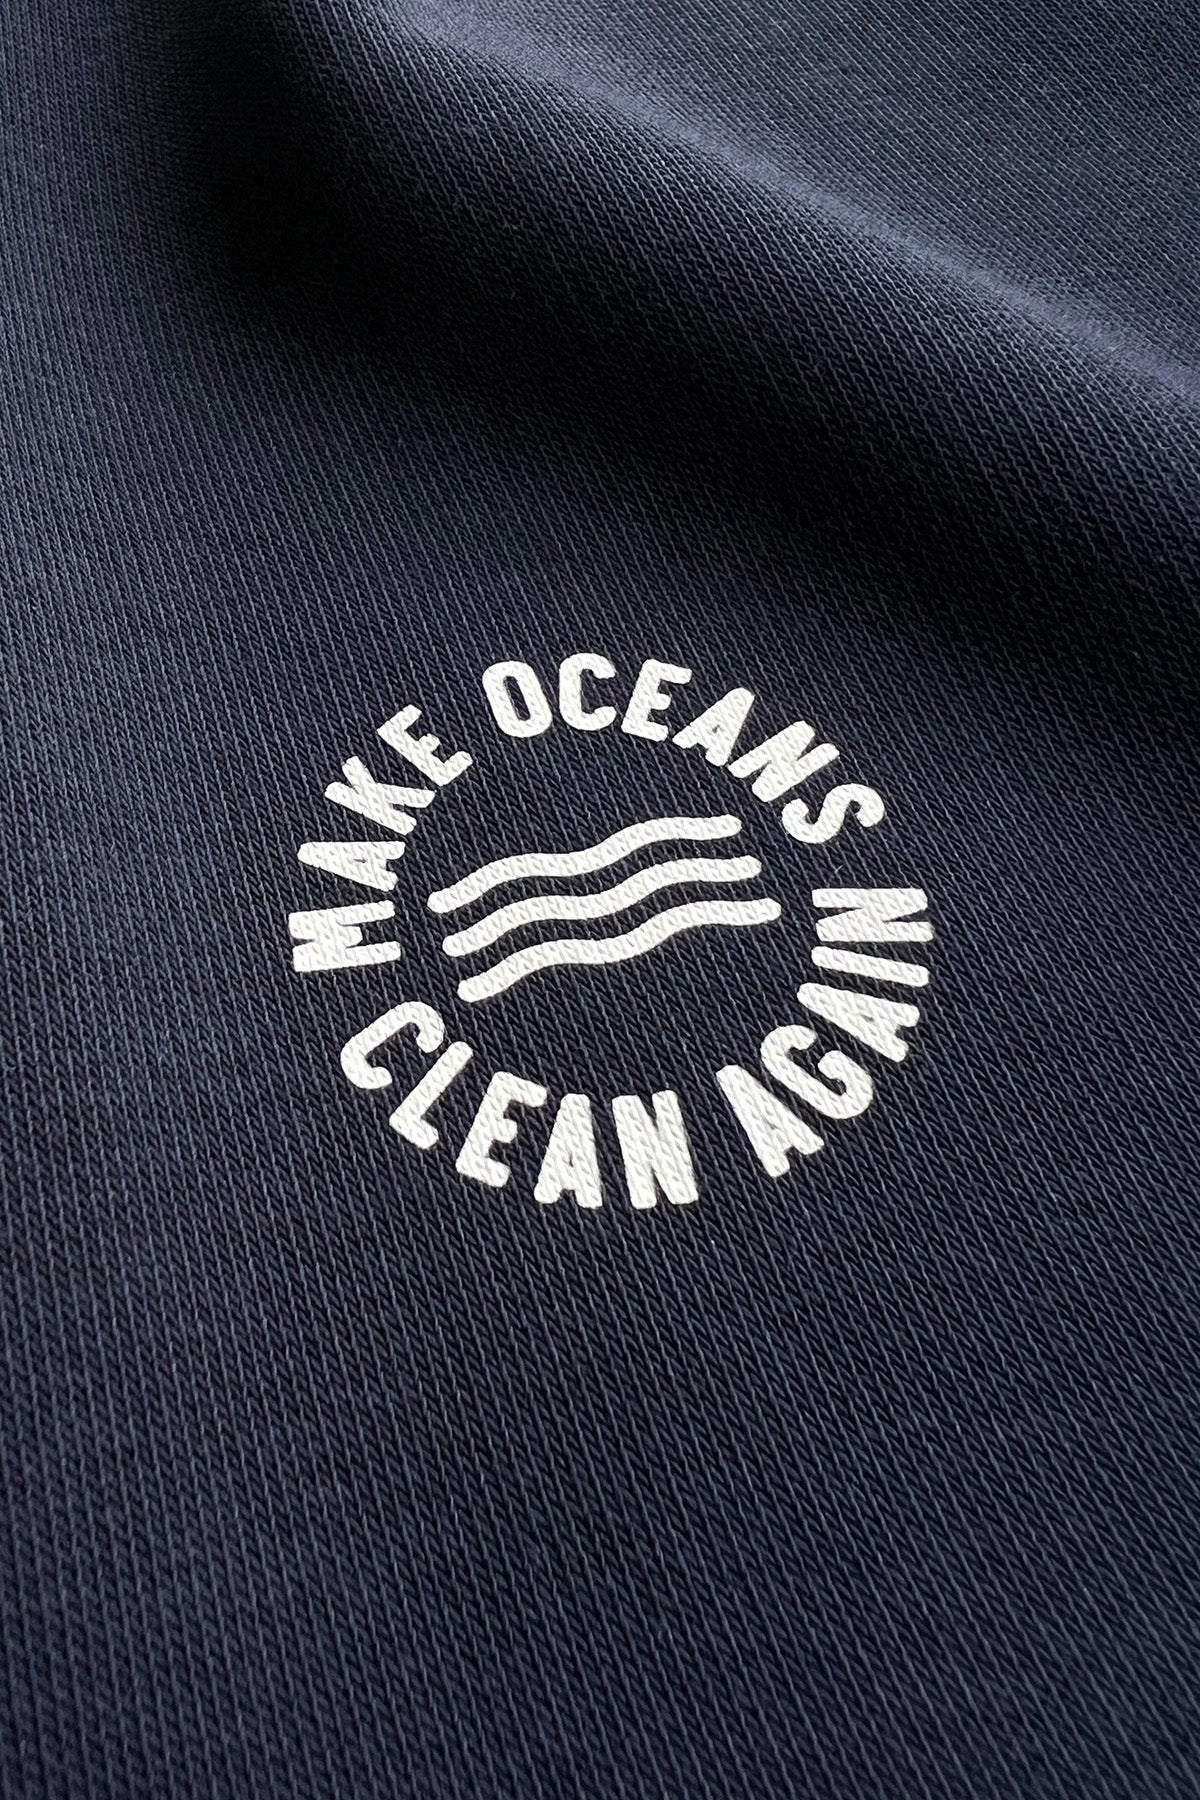 Sweat "Make Oceans Clean Again"